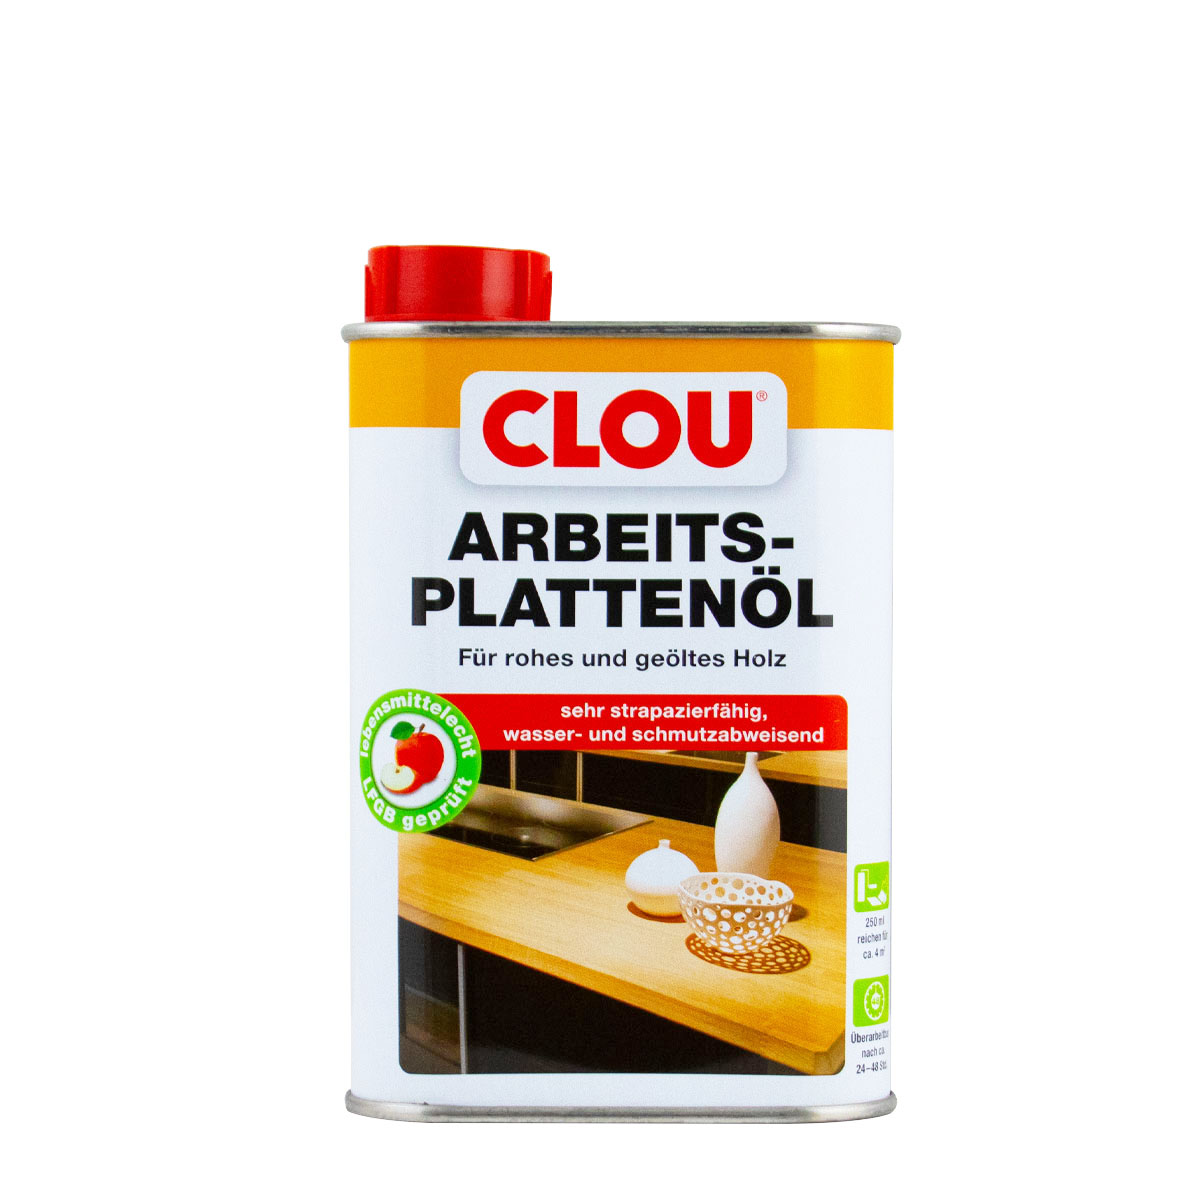 Clou Arbeitsplattenöl 250ml farblos, Küchenarbeitsplattenöl